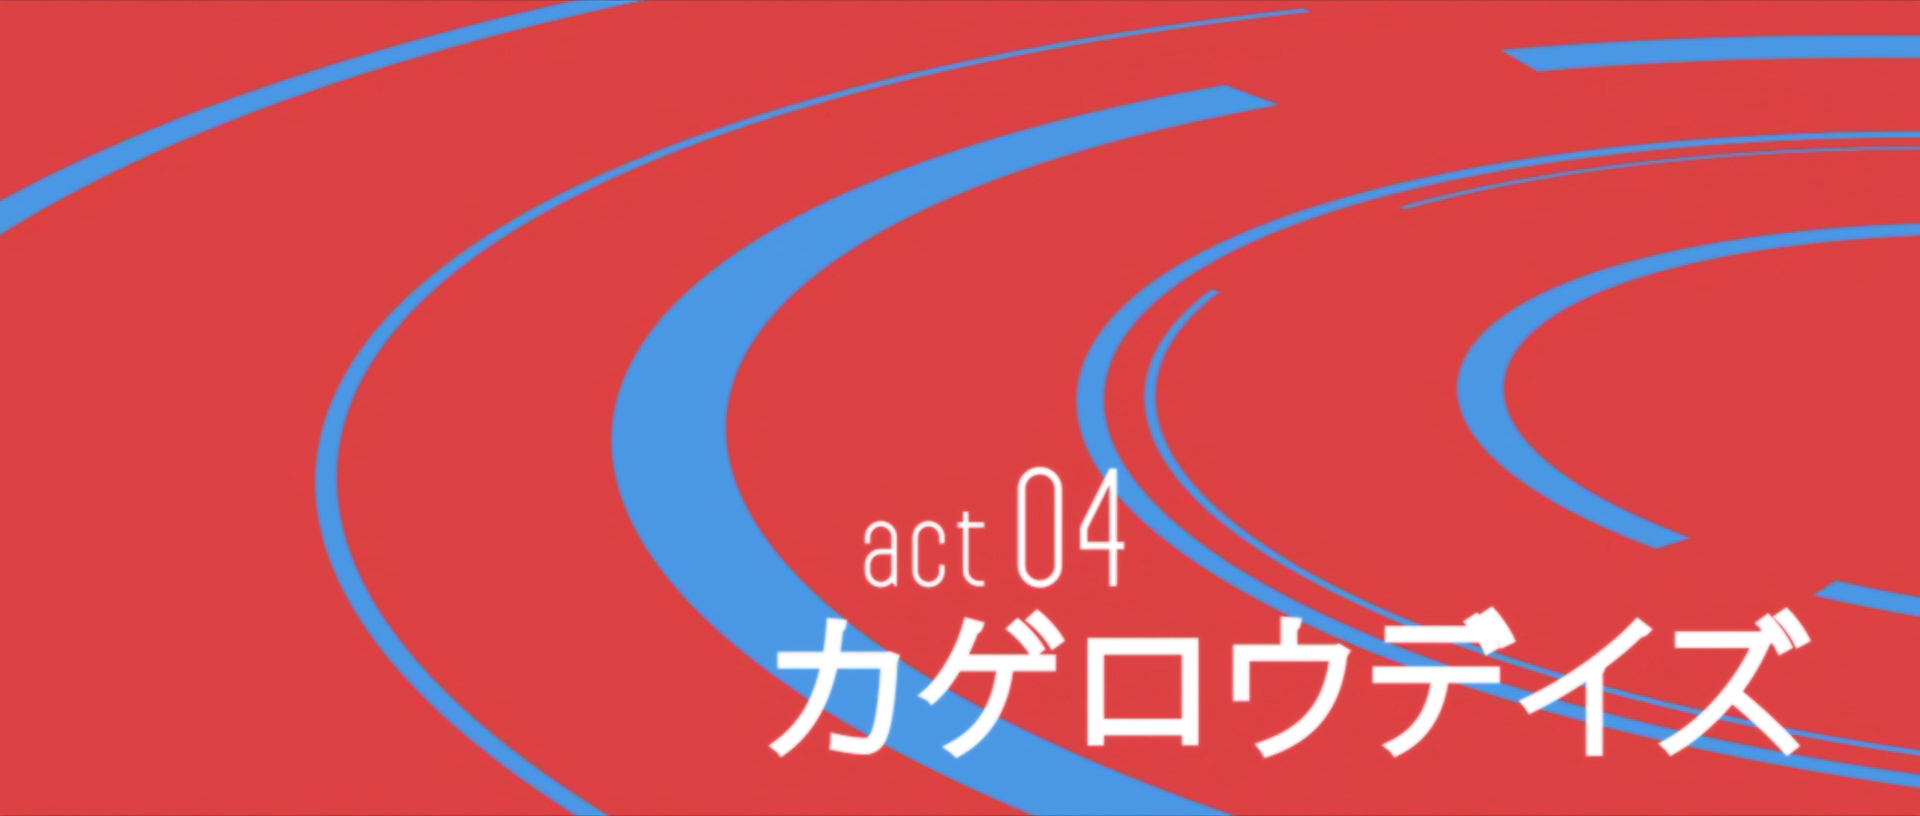 Mekakucity Actors - Episode 04/Gallery, Kagerou Project Wiki